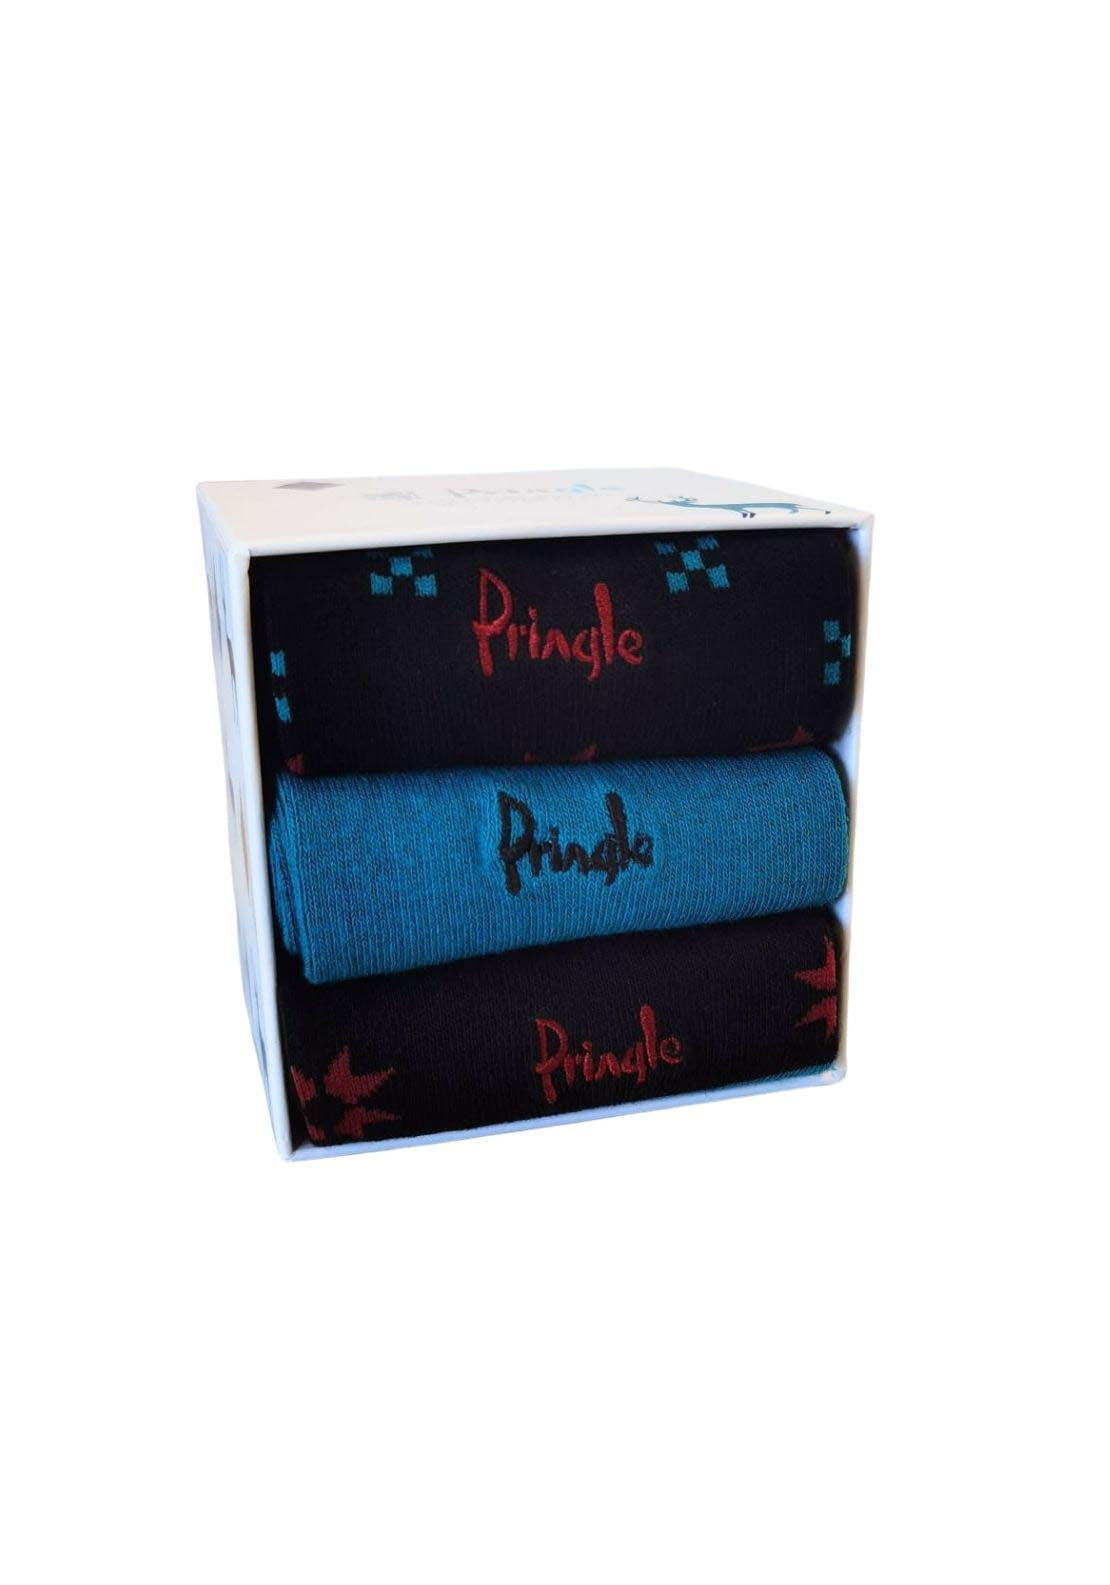 Pringle 3 Pack Boxed Socks - Multi 1 Shaws Department Stores